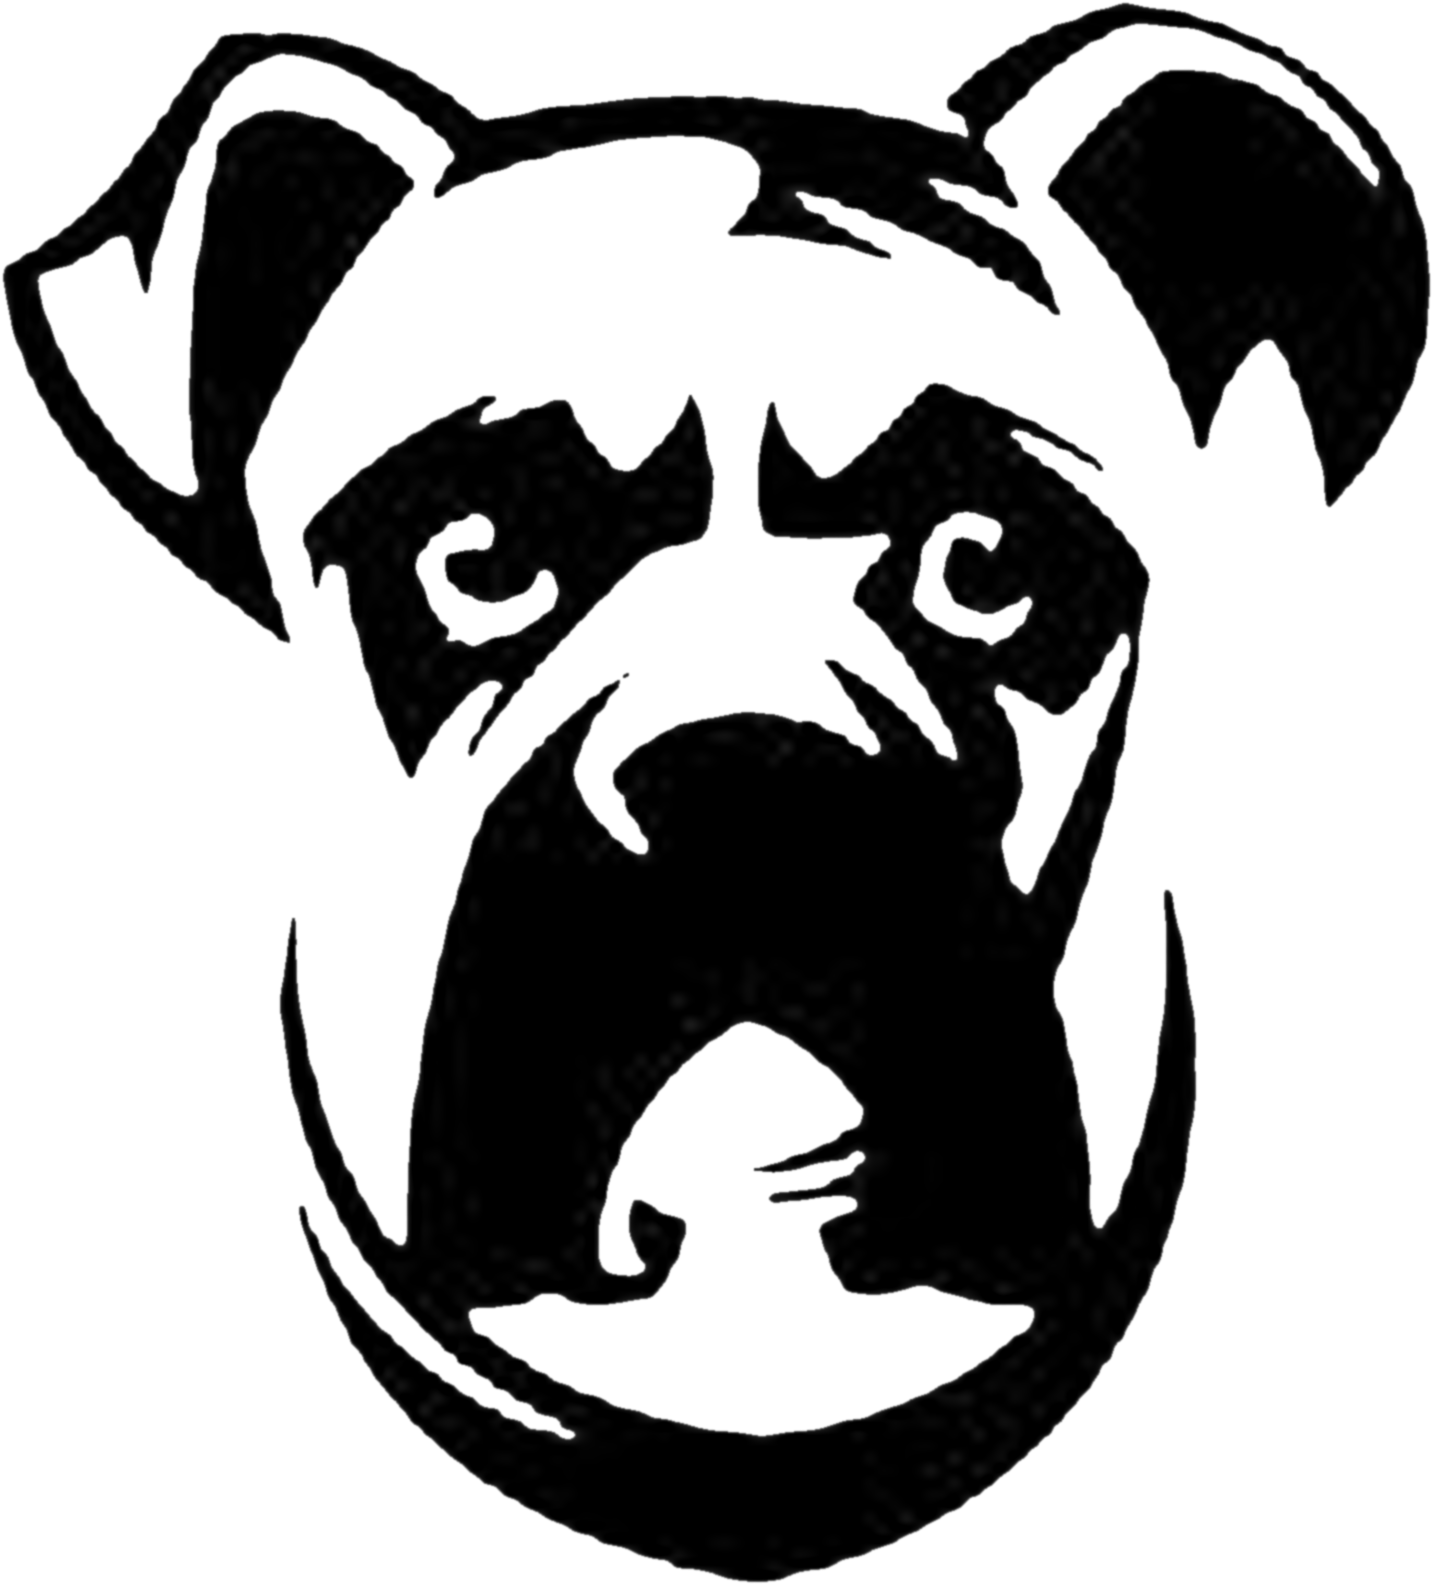 Boxerface - Gambar Sketsa Kepala Anjing (1583x1583)